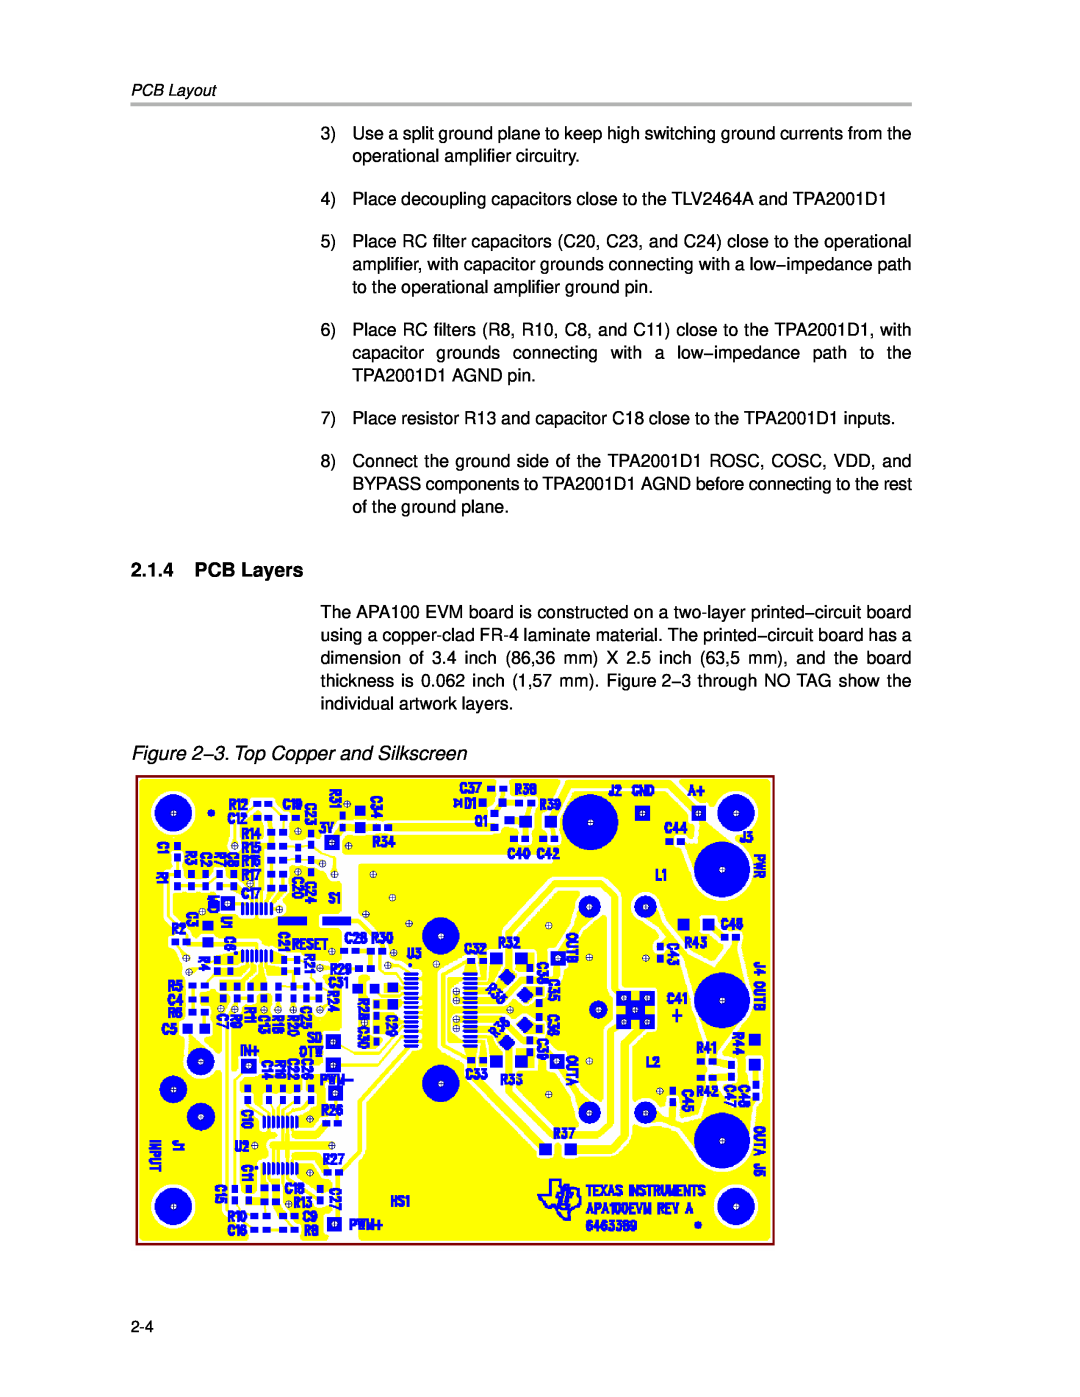 Texas Instruments APA100 manual 2.1.4PCB Layers, 3. Top Copper and Silkscreen 